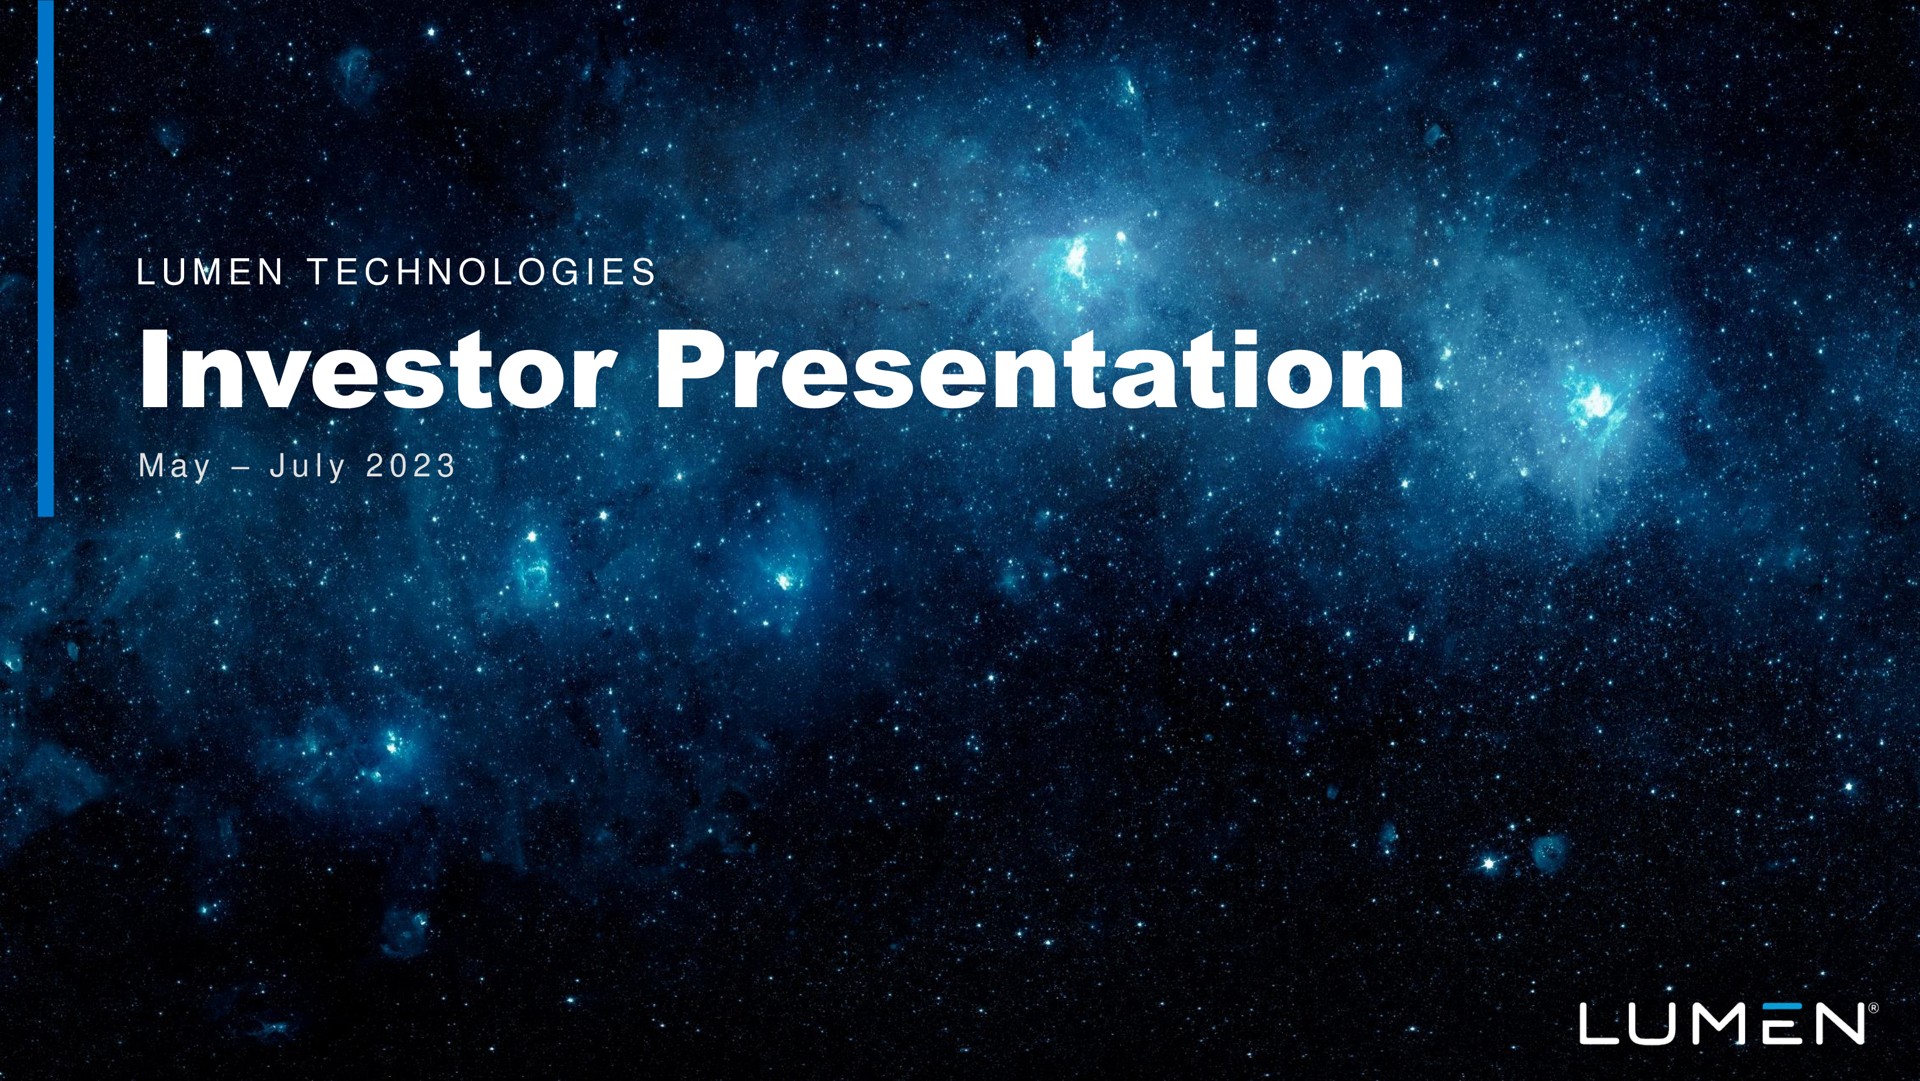 investor presentation lumen technologies i aes lumen | Lumen